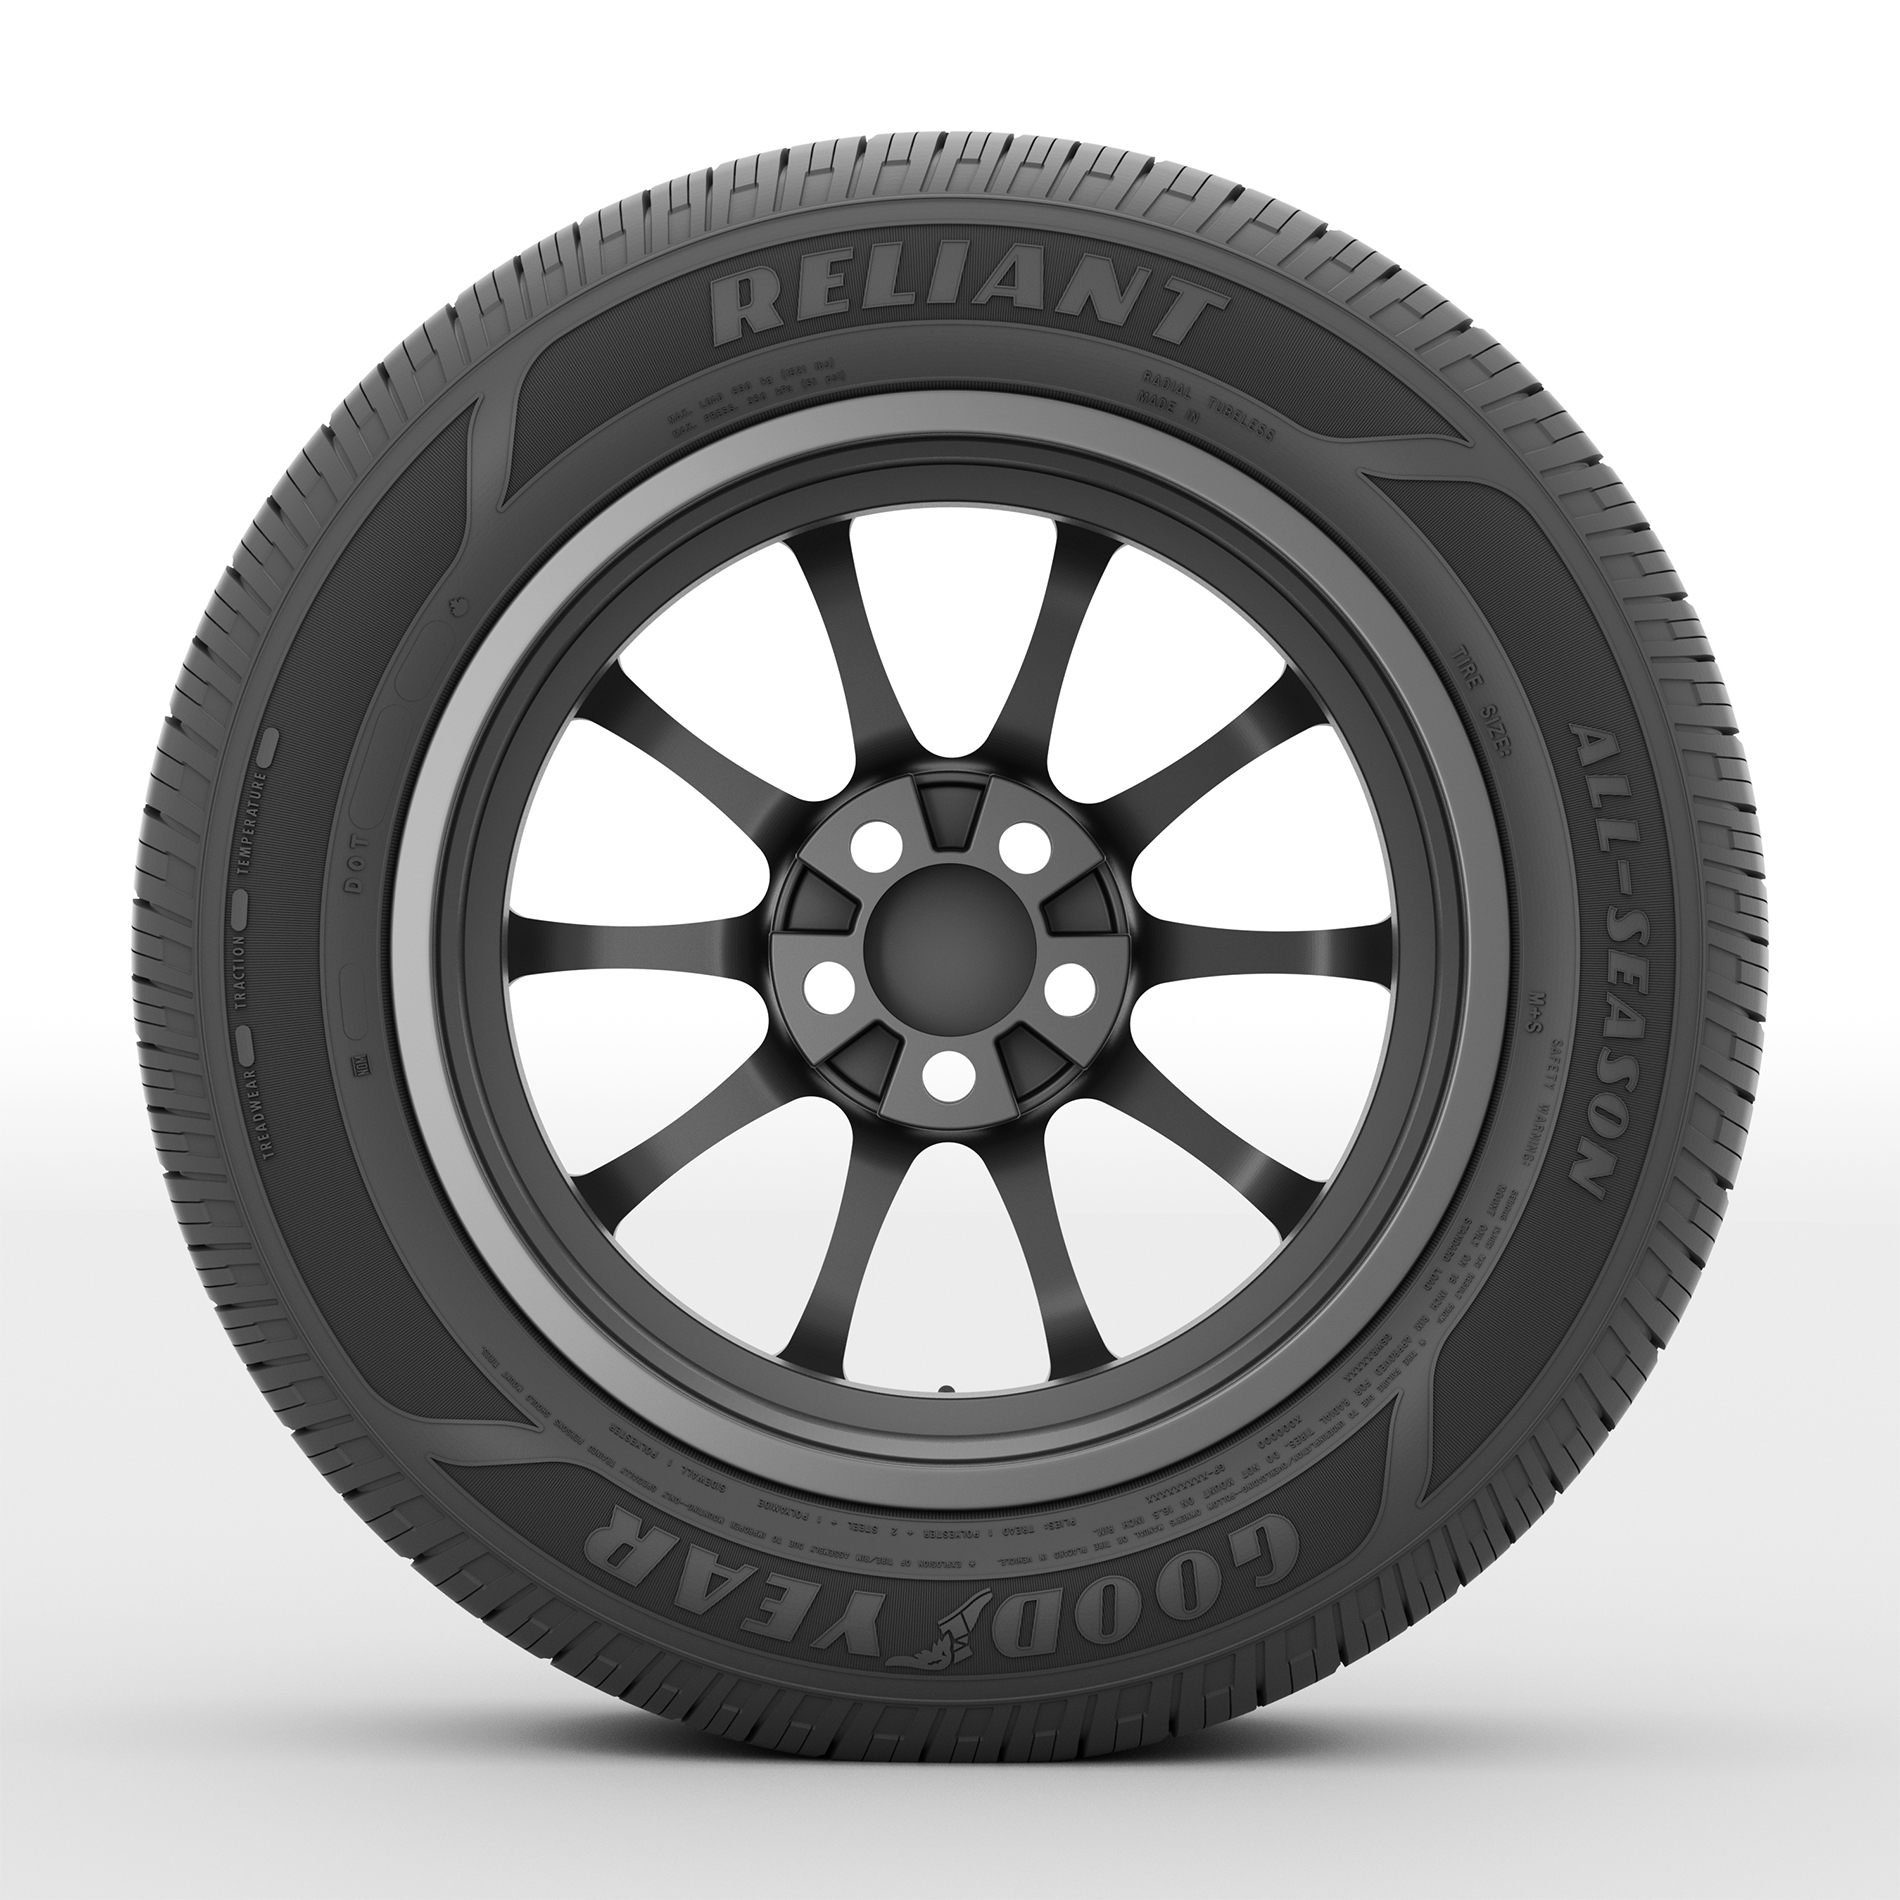 Goodyear Reliant All-Season 225/50R17 94V All-Season Passenger Car Tire